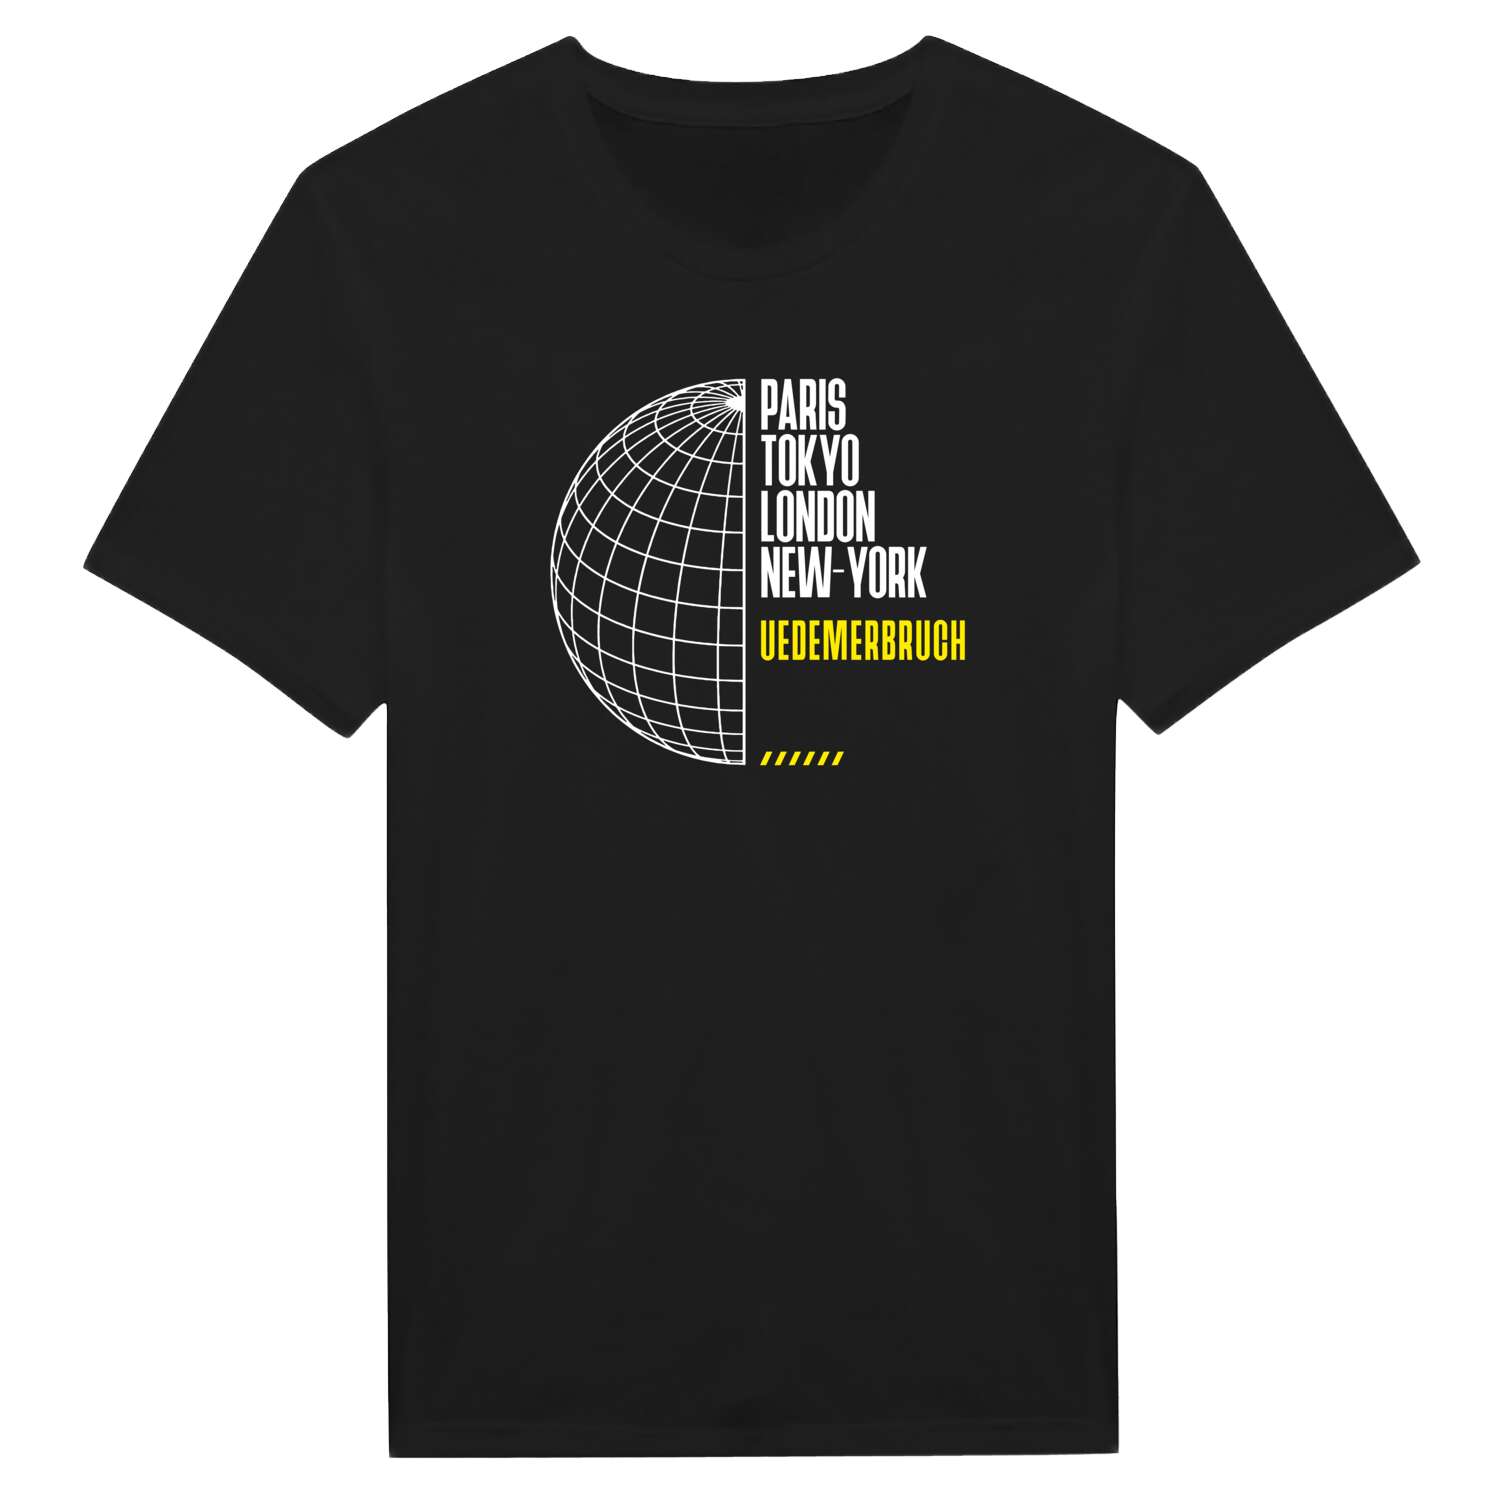 Uedemerbruch T-Shirt »Paris Tokyo London«